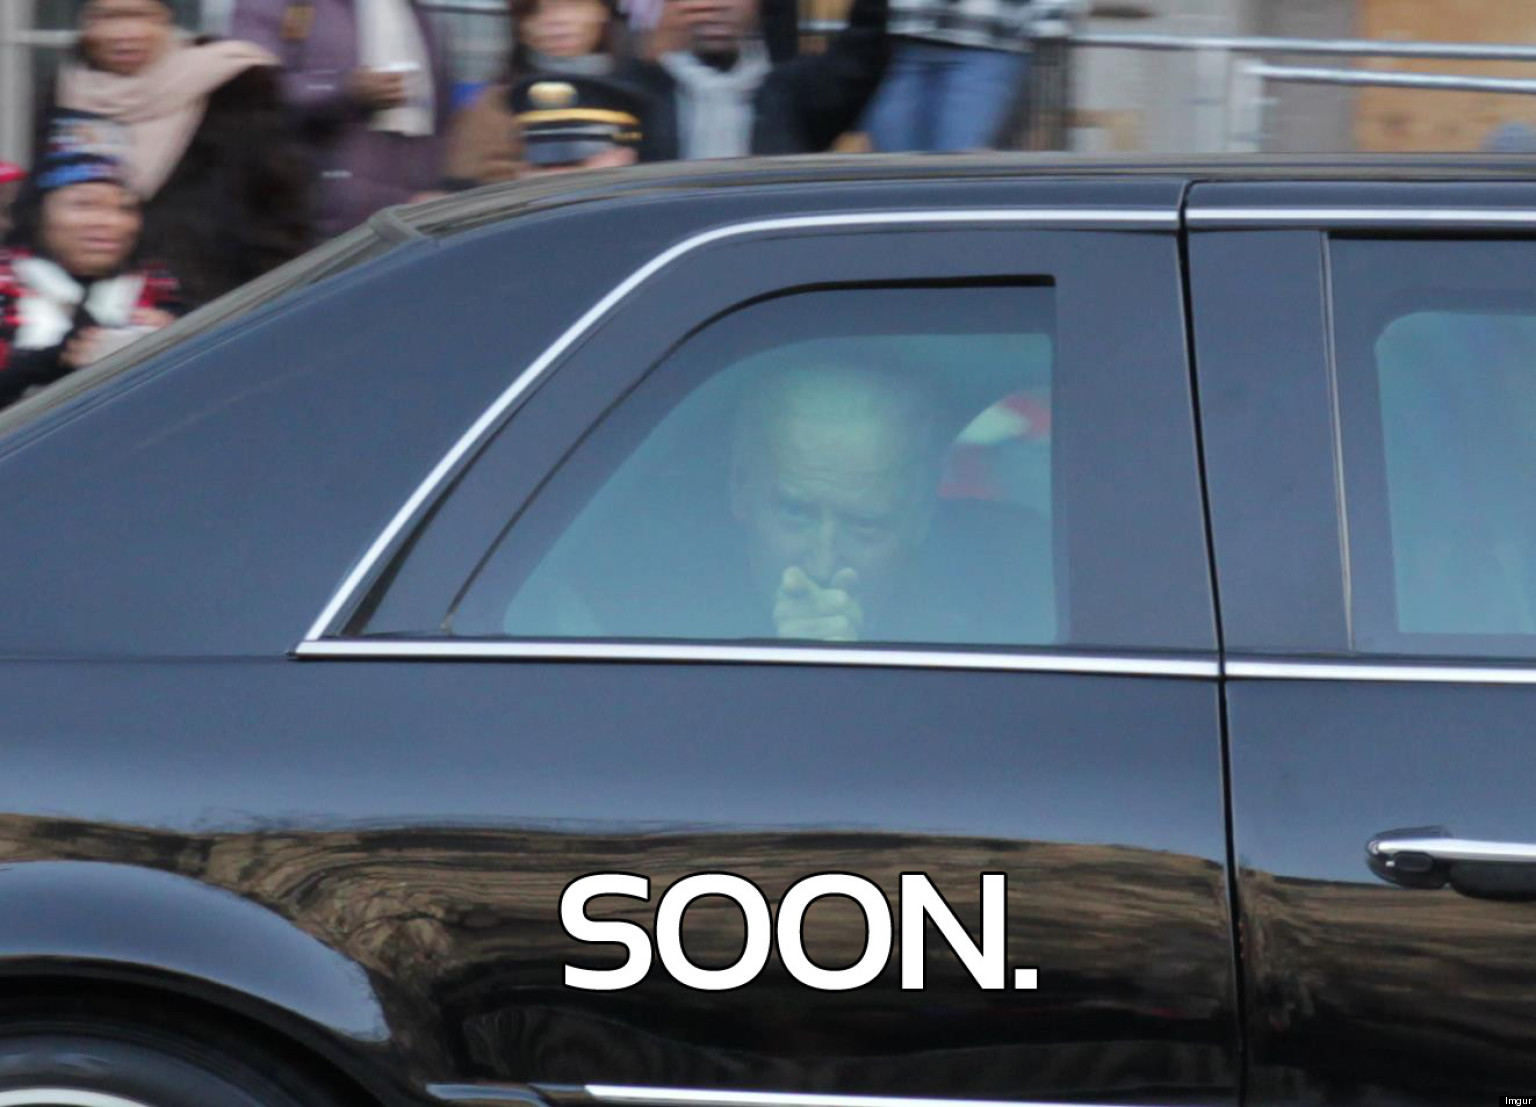 Joe Biden Joins 'Soon' Meme After Leaving Inauguration (PHOTO) | HuffPost